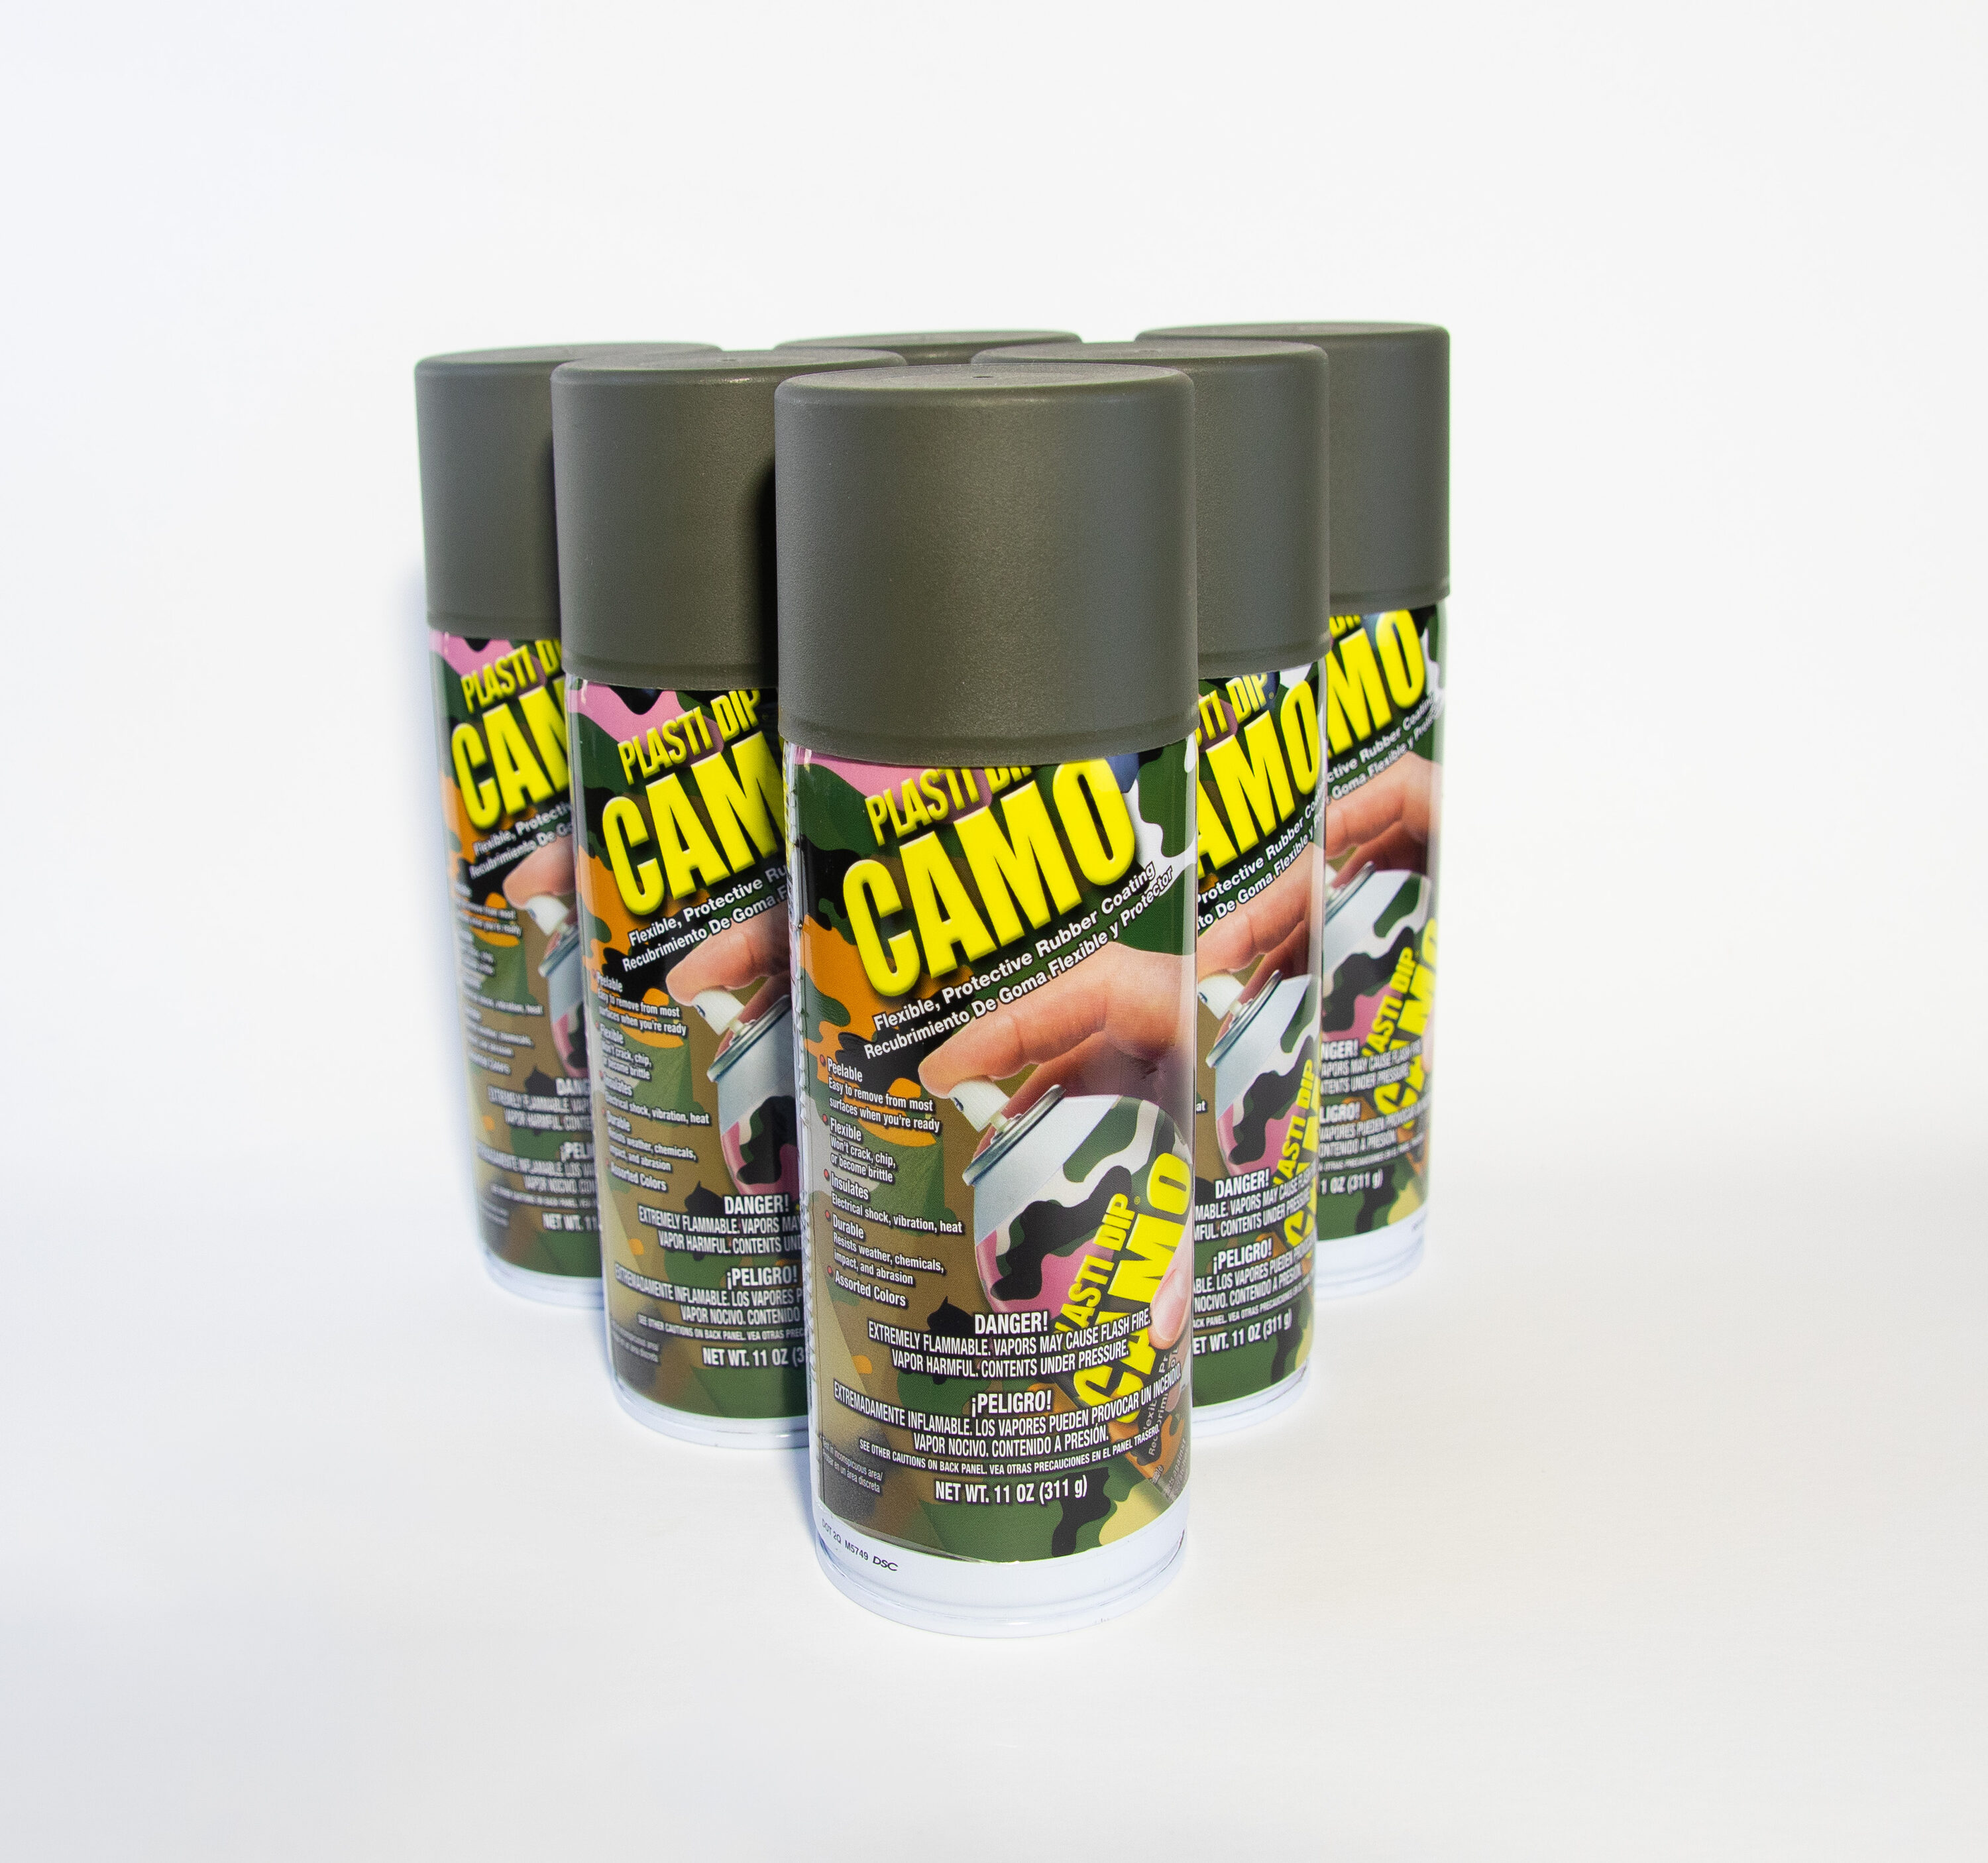 Performix Plasti Dip Green Camo Rubber Coating Spray Paint 11217-6